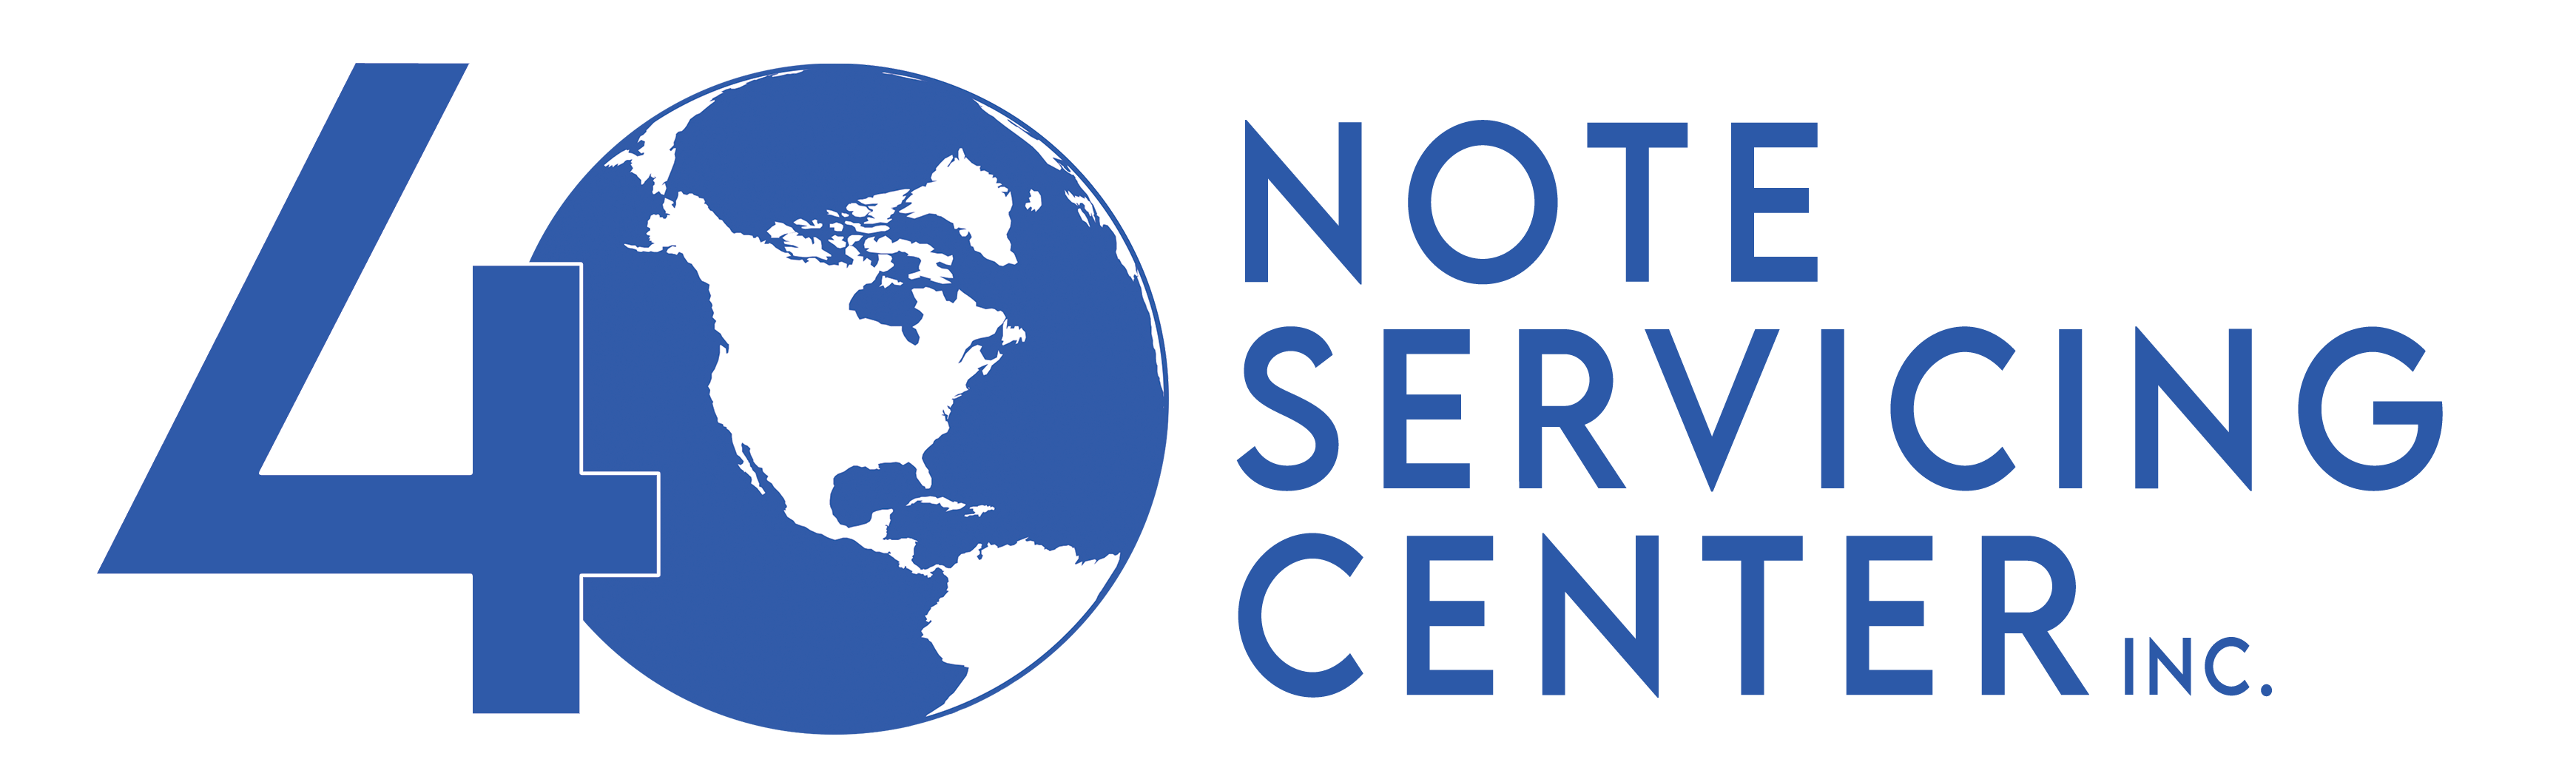 Note Servicing Center Logo